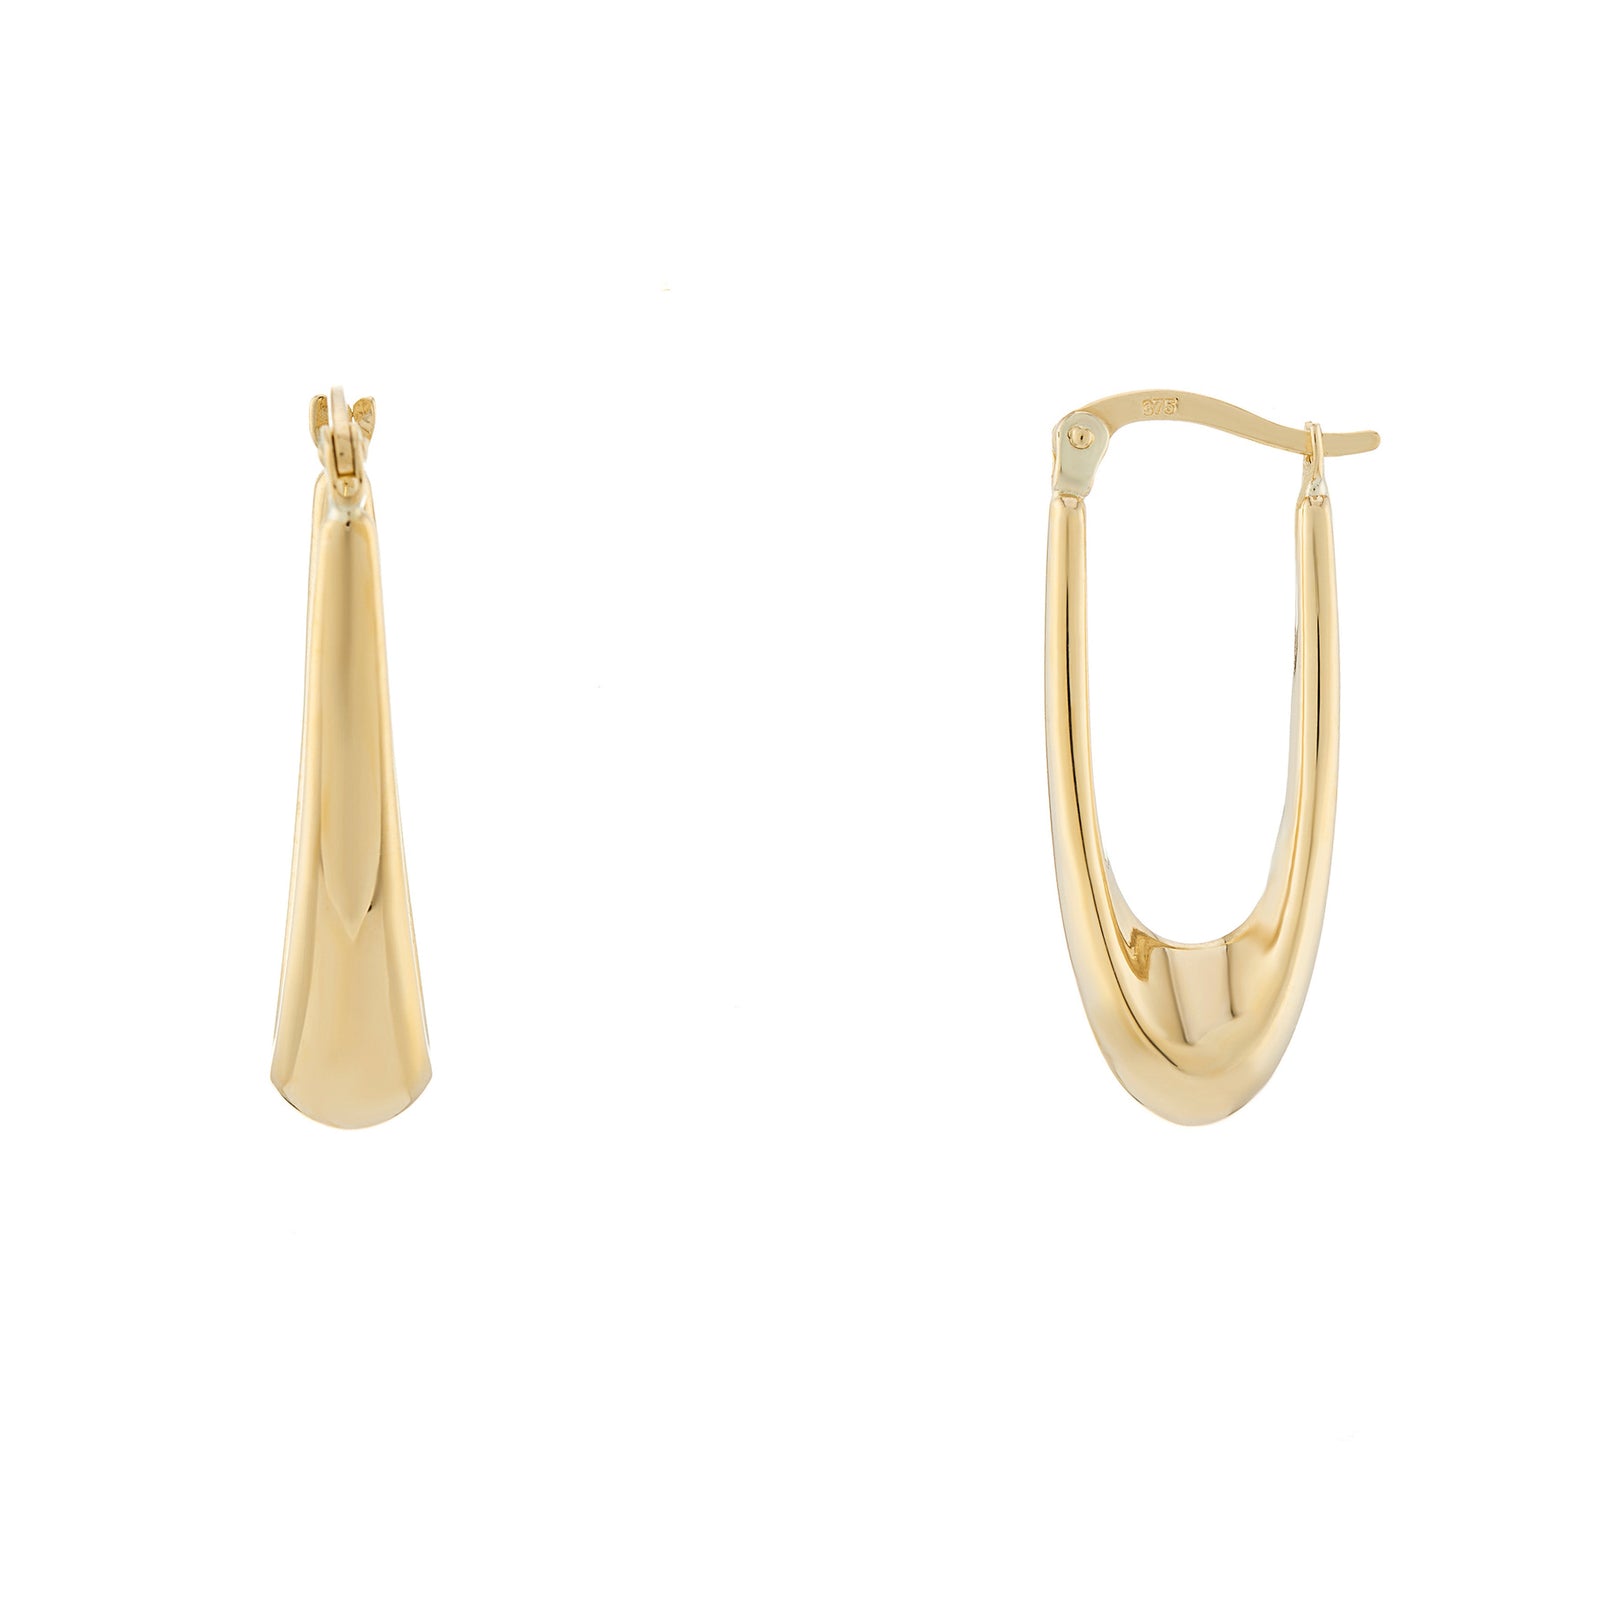 9ct gold plain oval creole hoop earrings